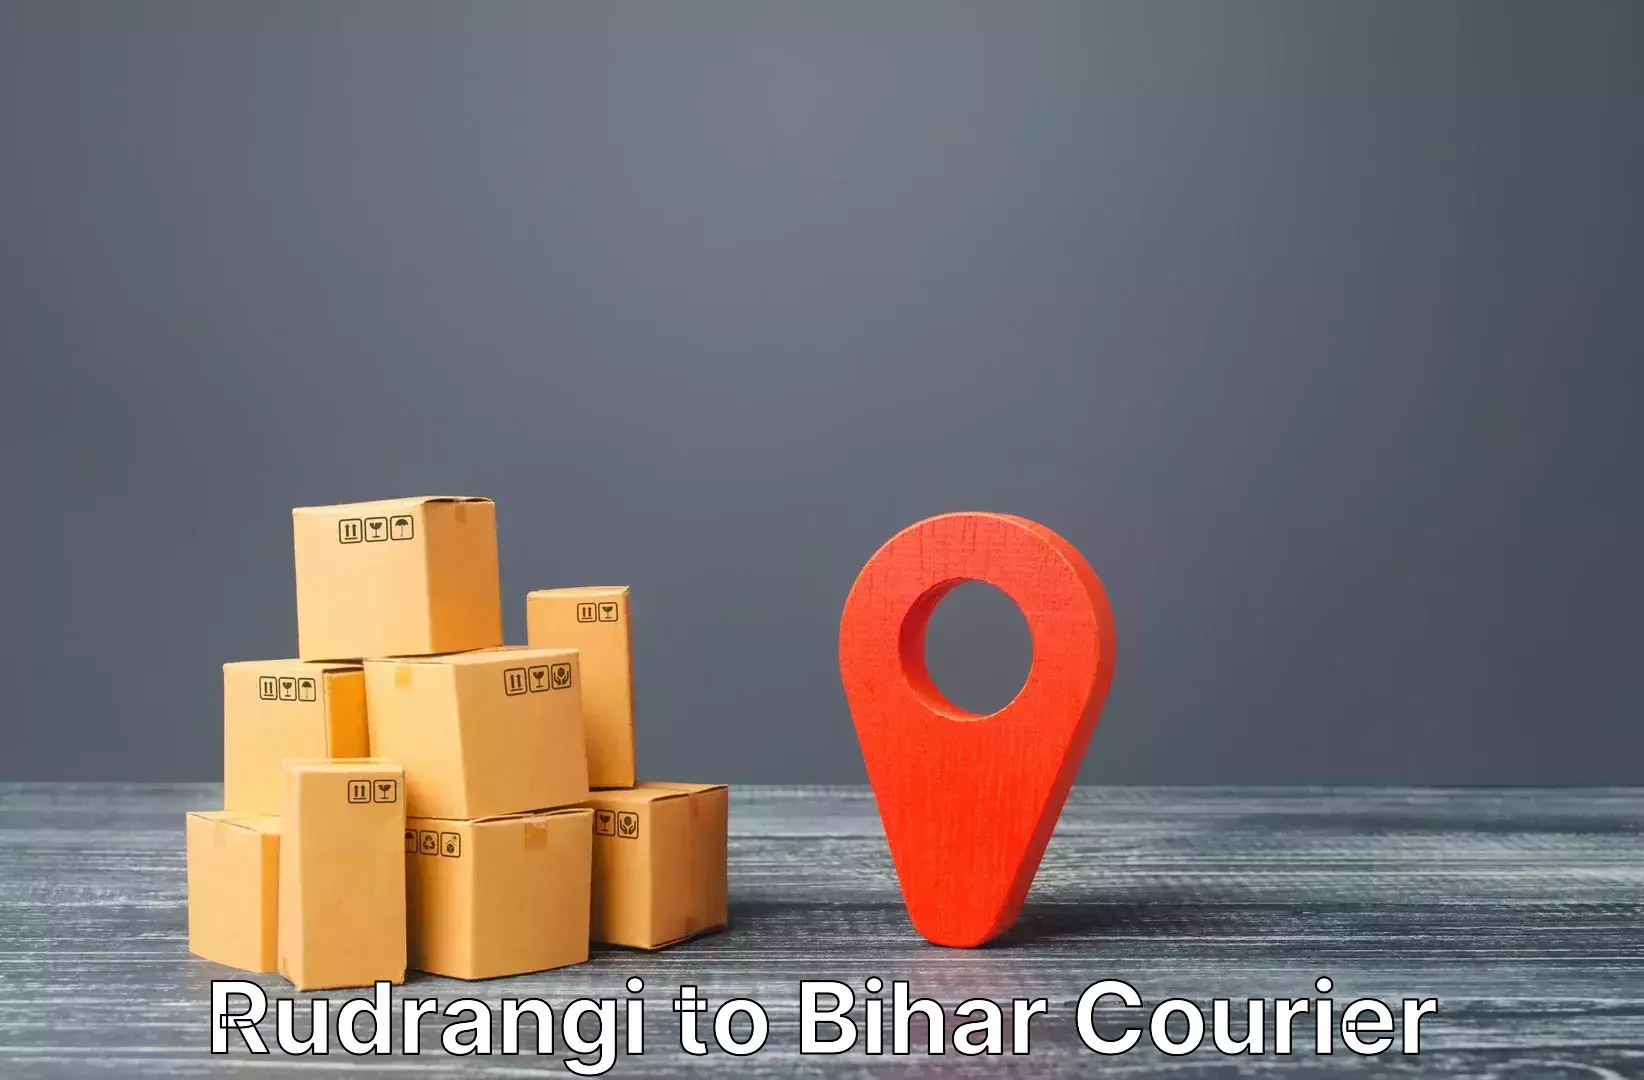 Luggage delivery system Rudrangi to Bhorey